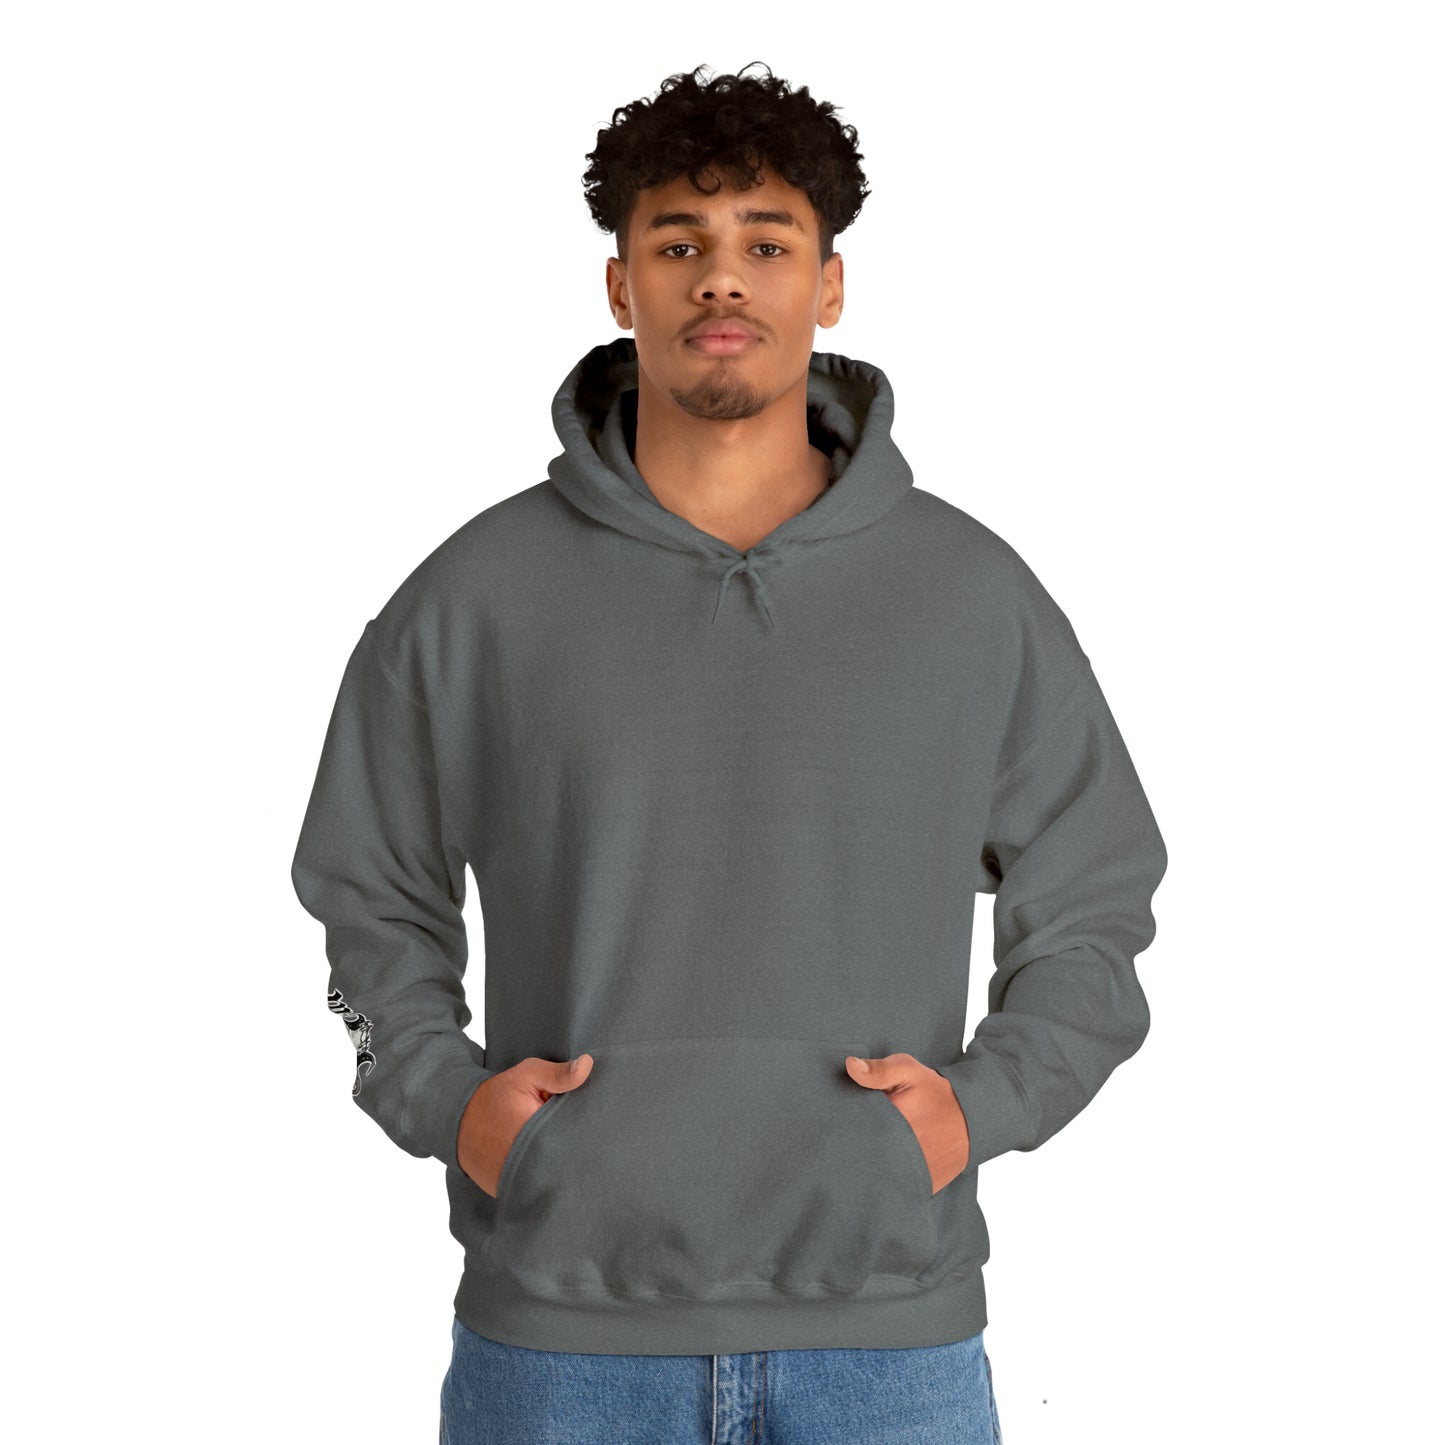 Unisex Plant Hoes Hooded Sweatshirt